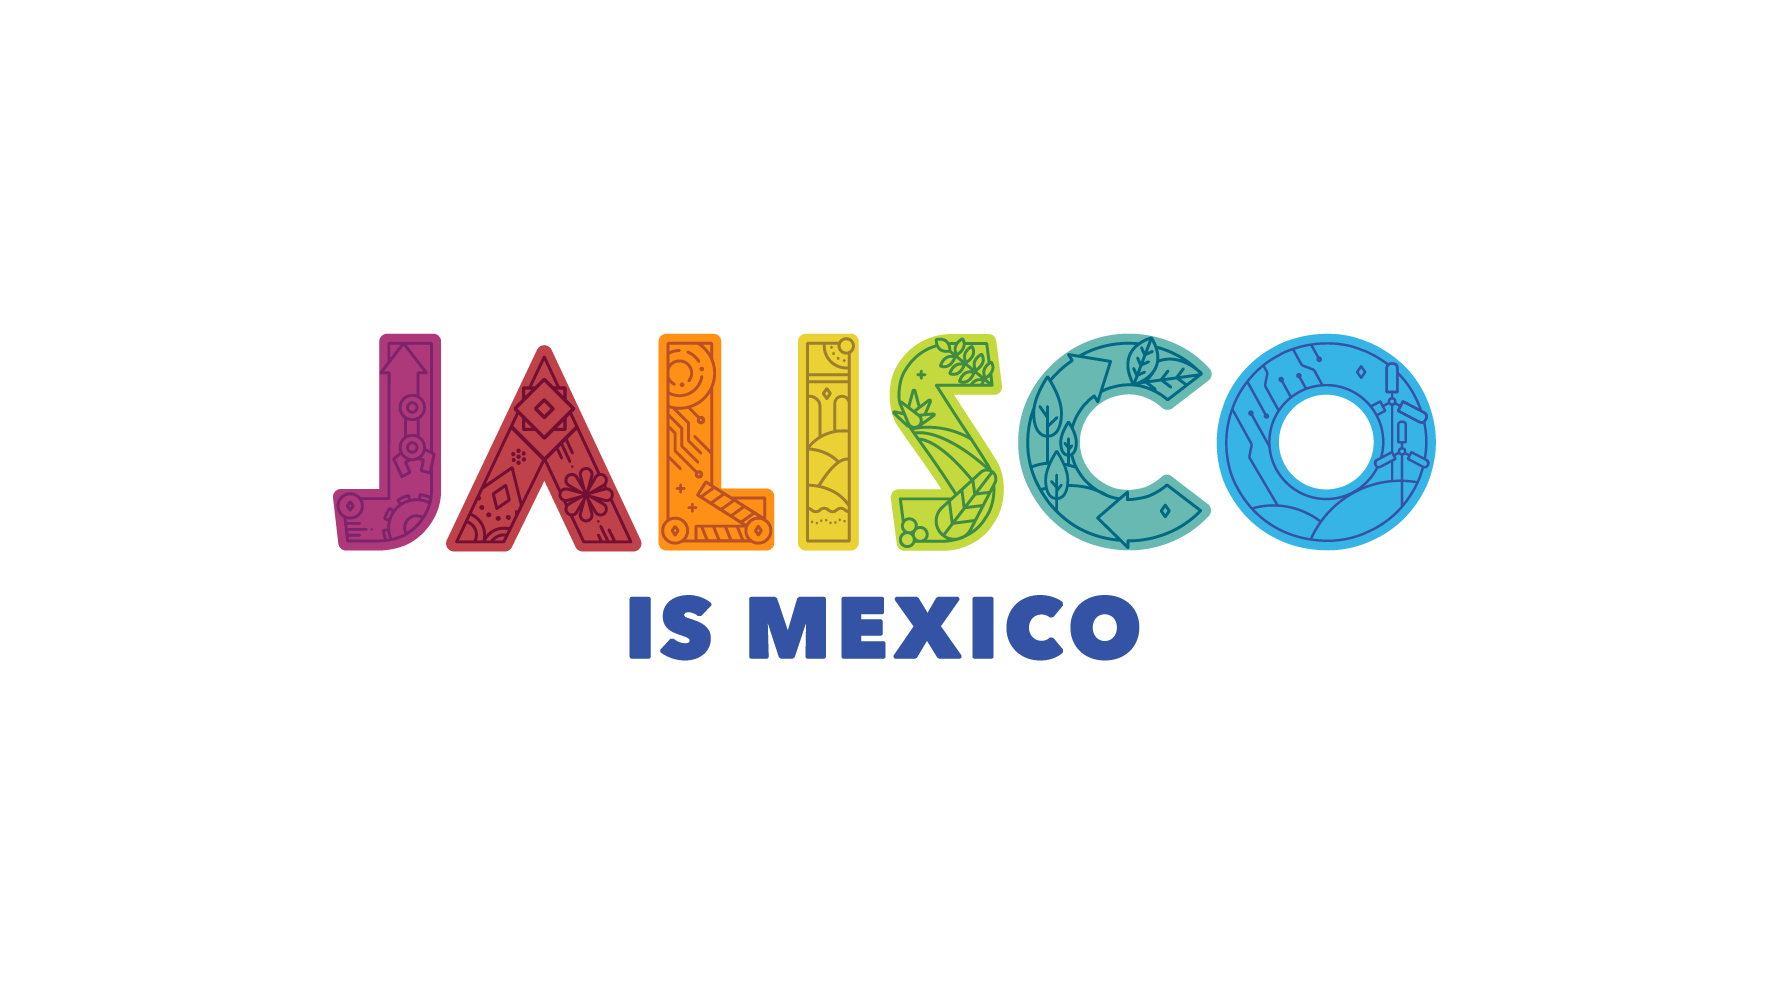 tequilafest_logojalisco is mexico logo